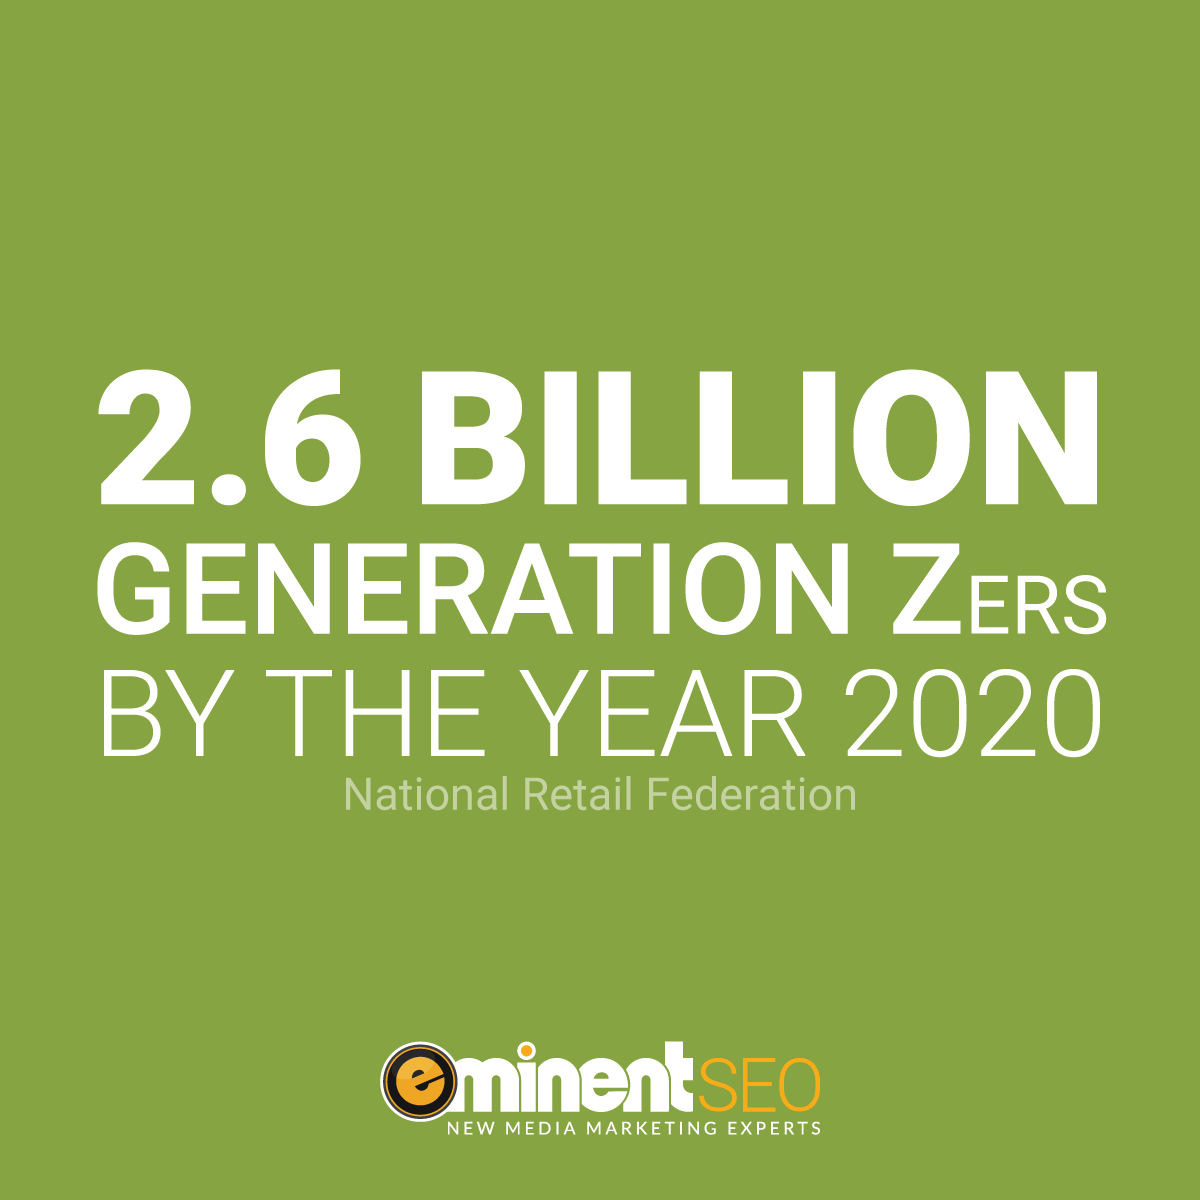 2.6 Billion Generation Zers By 2020 - Eminent SEO